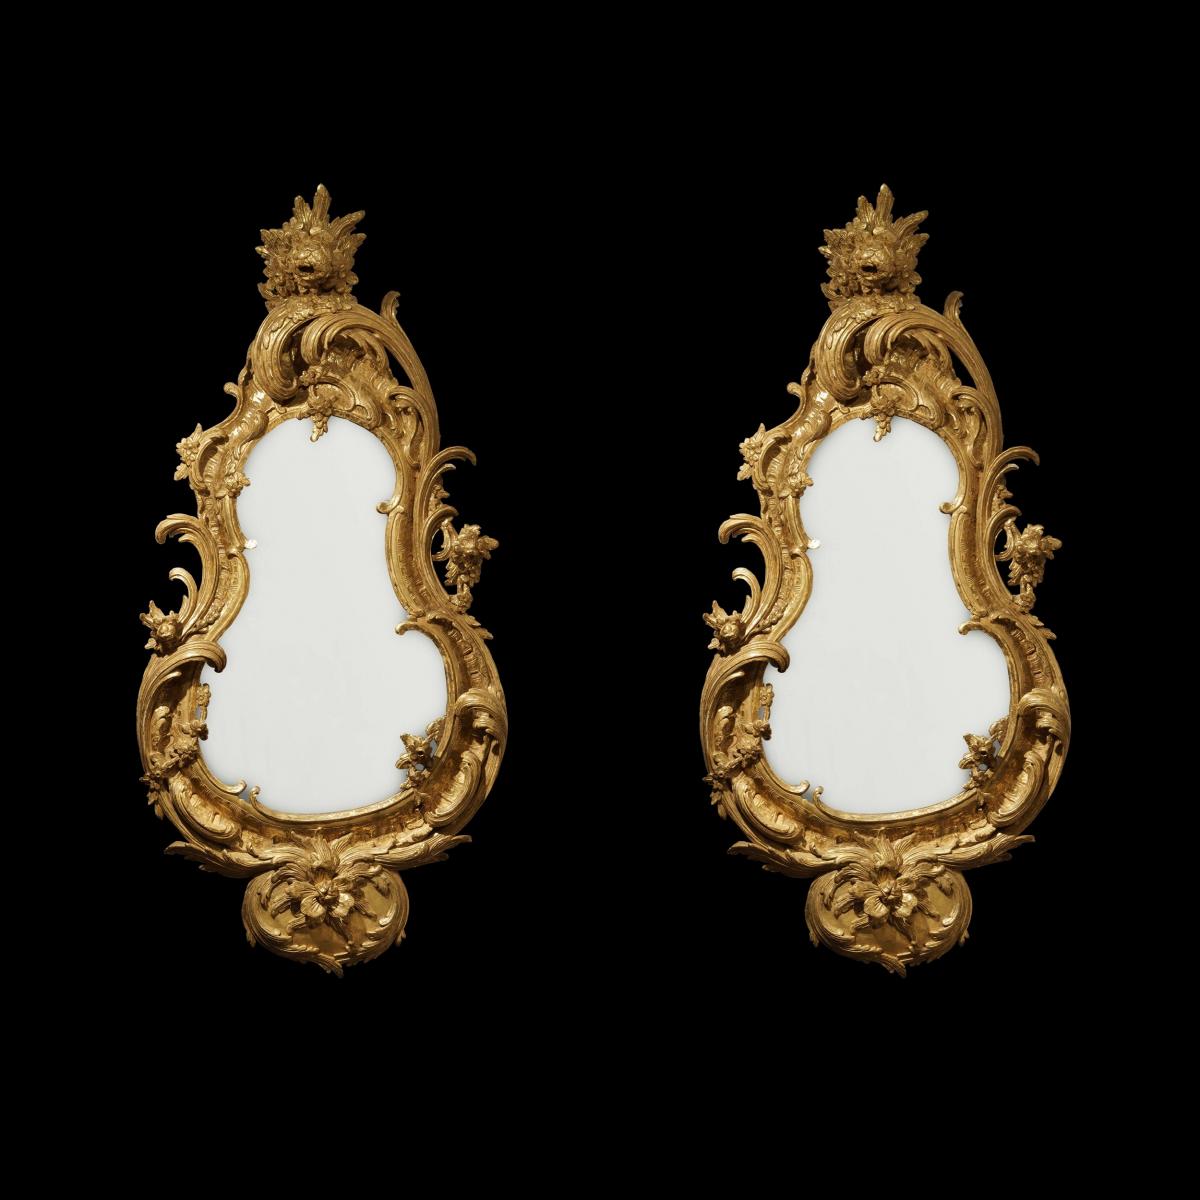 Pair of George II Style Mirrors